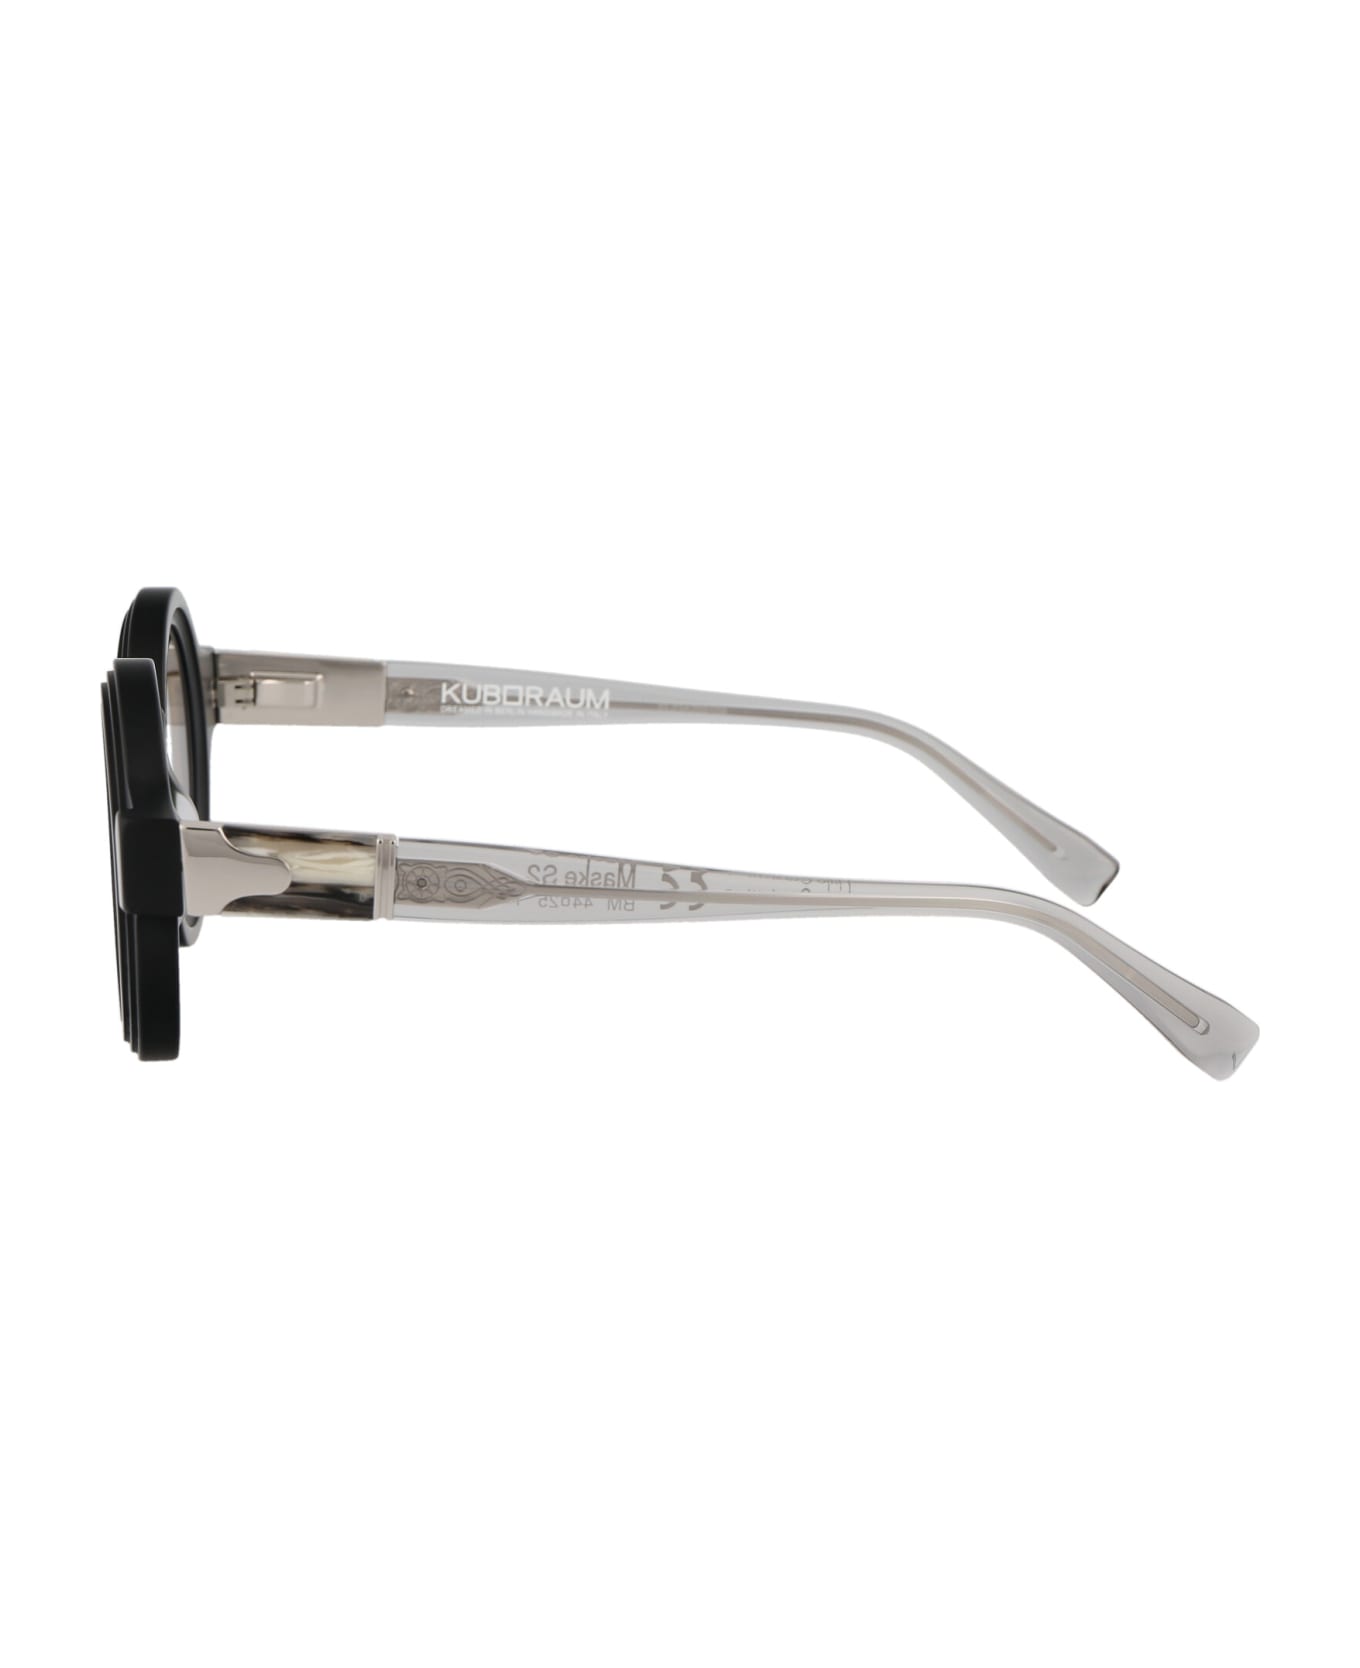 Kuboraum Maske S2 Glasses - BM black アイウェア